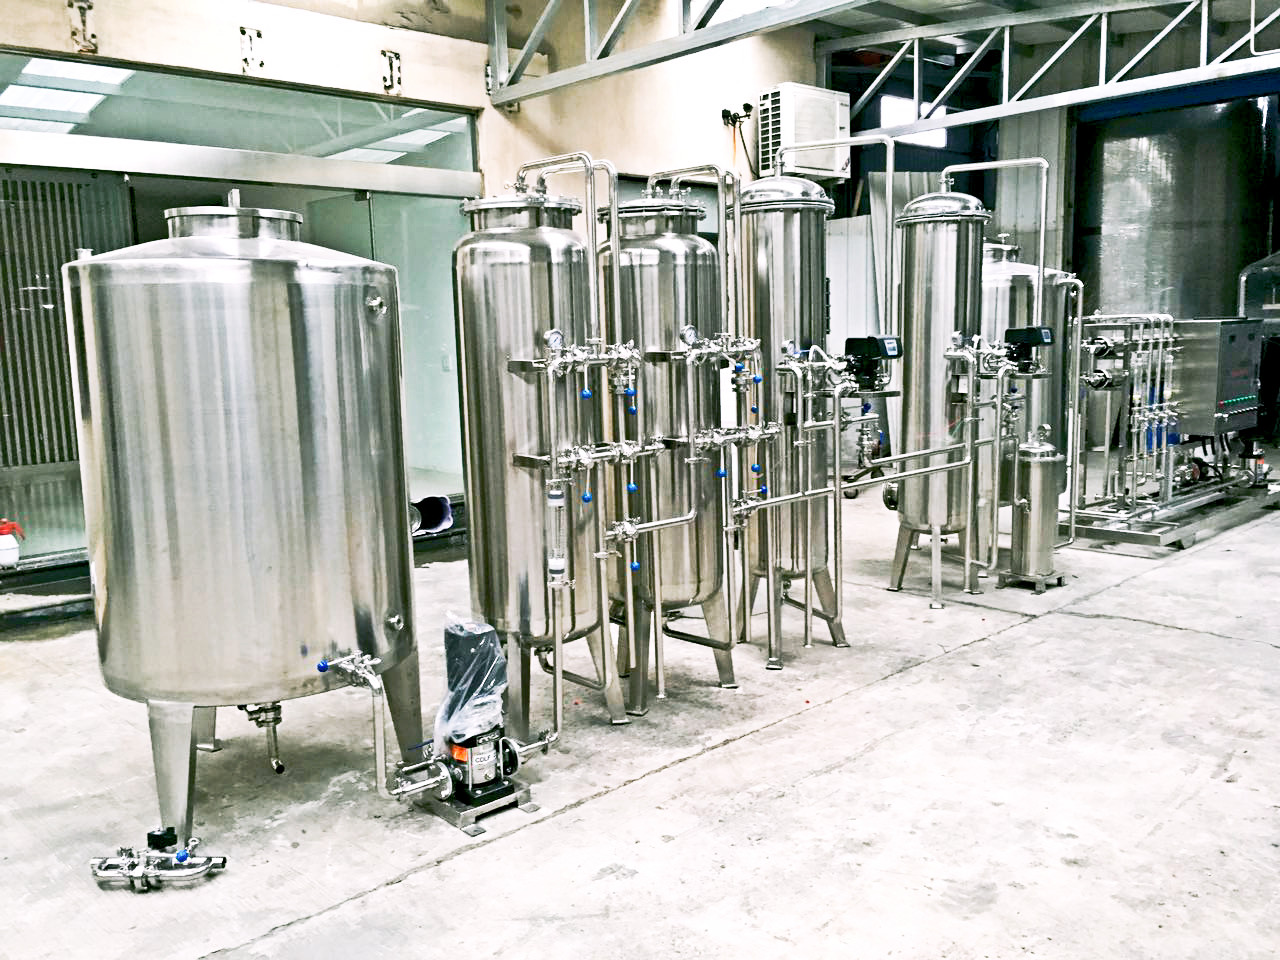 amazon best sellers: best beer brewing equipment - accupacking